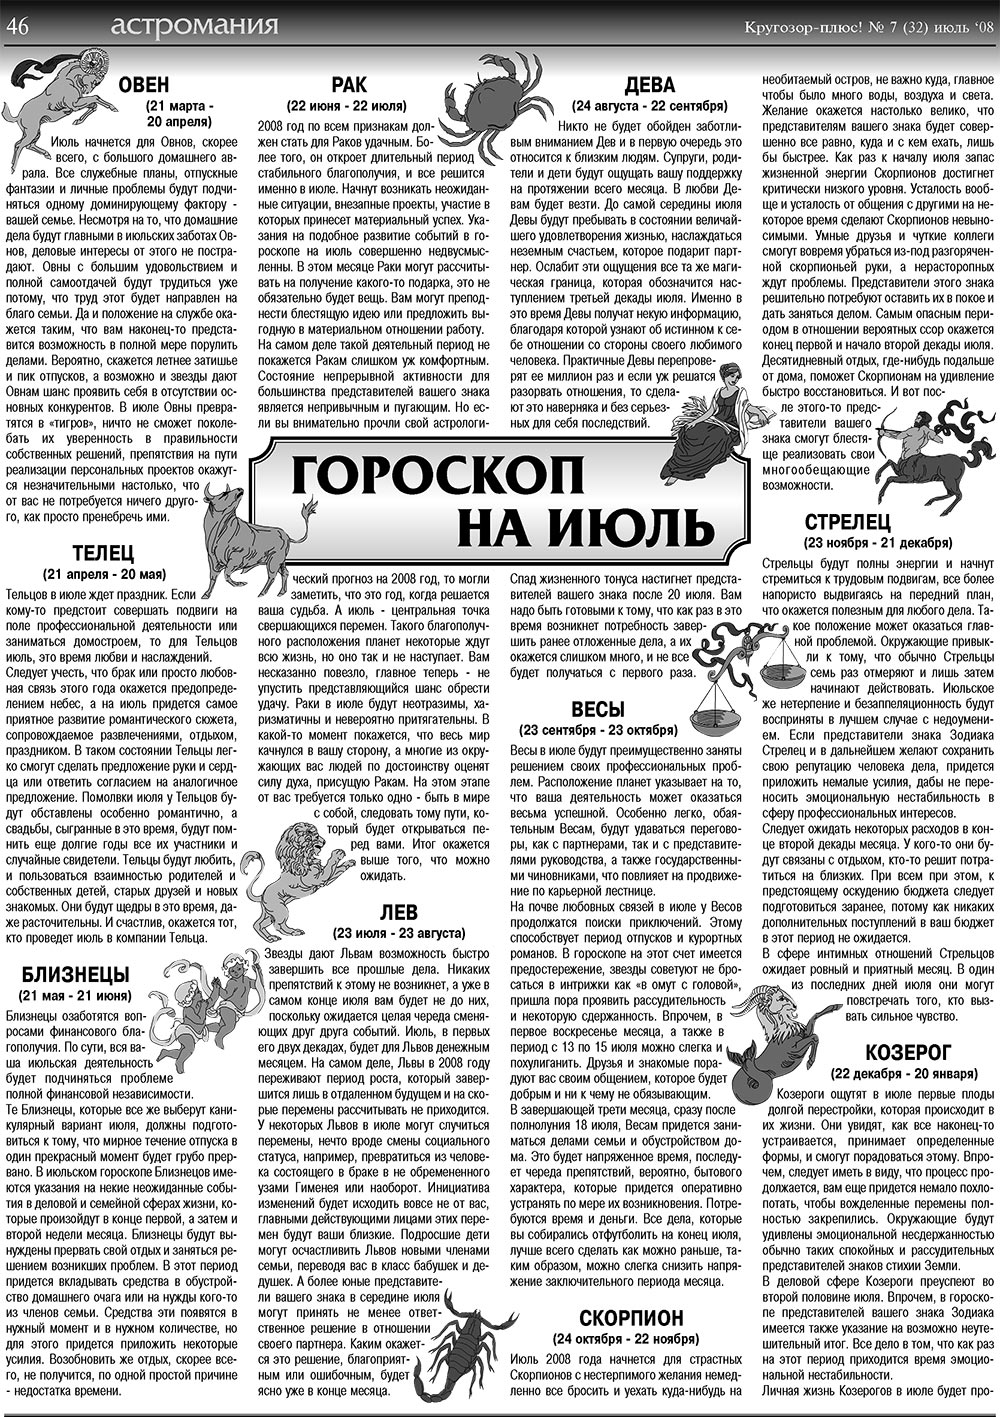 Кругозор плюс! (газета). 2008 год, номер 7, стр. 46